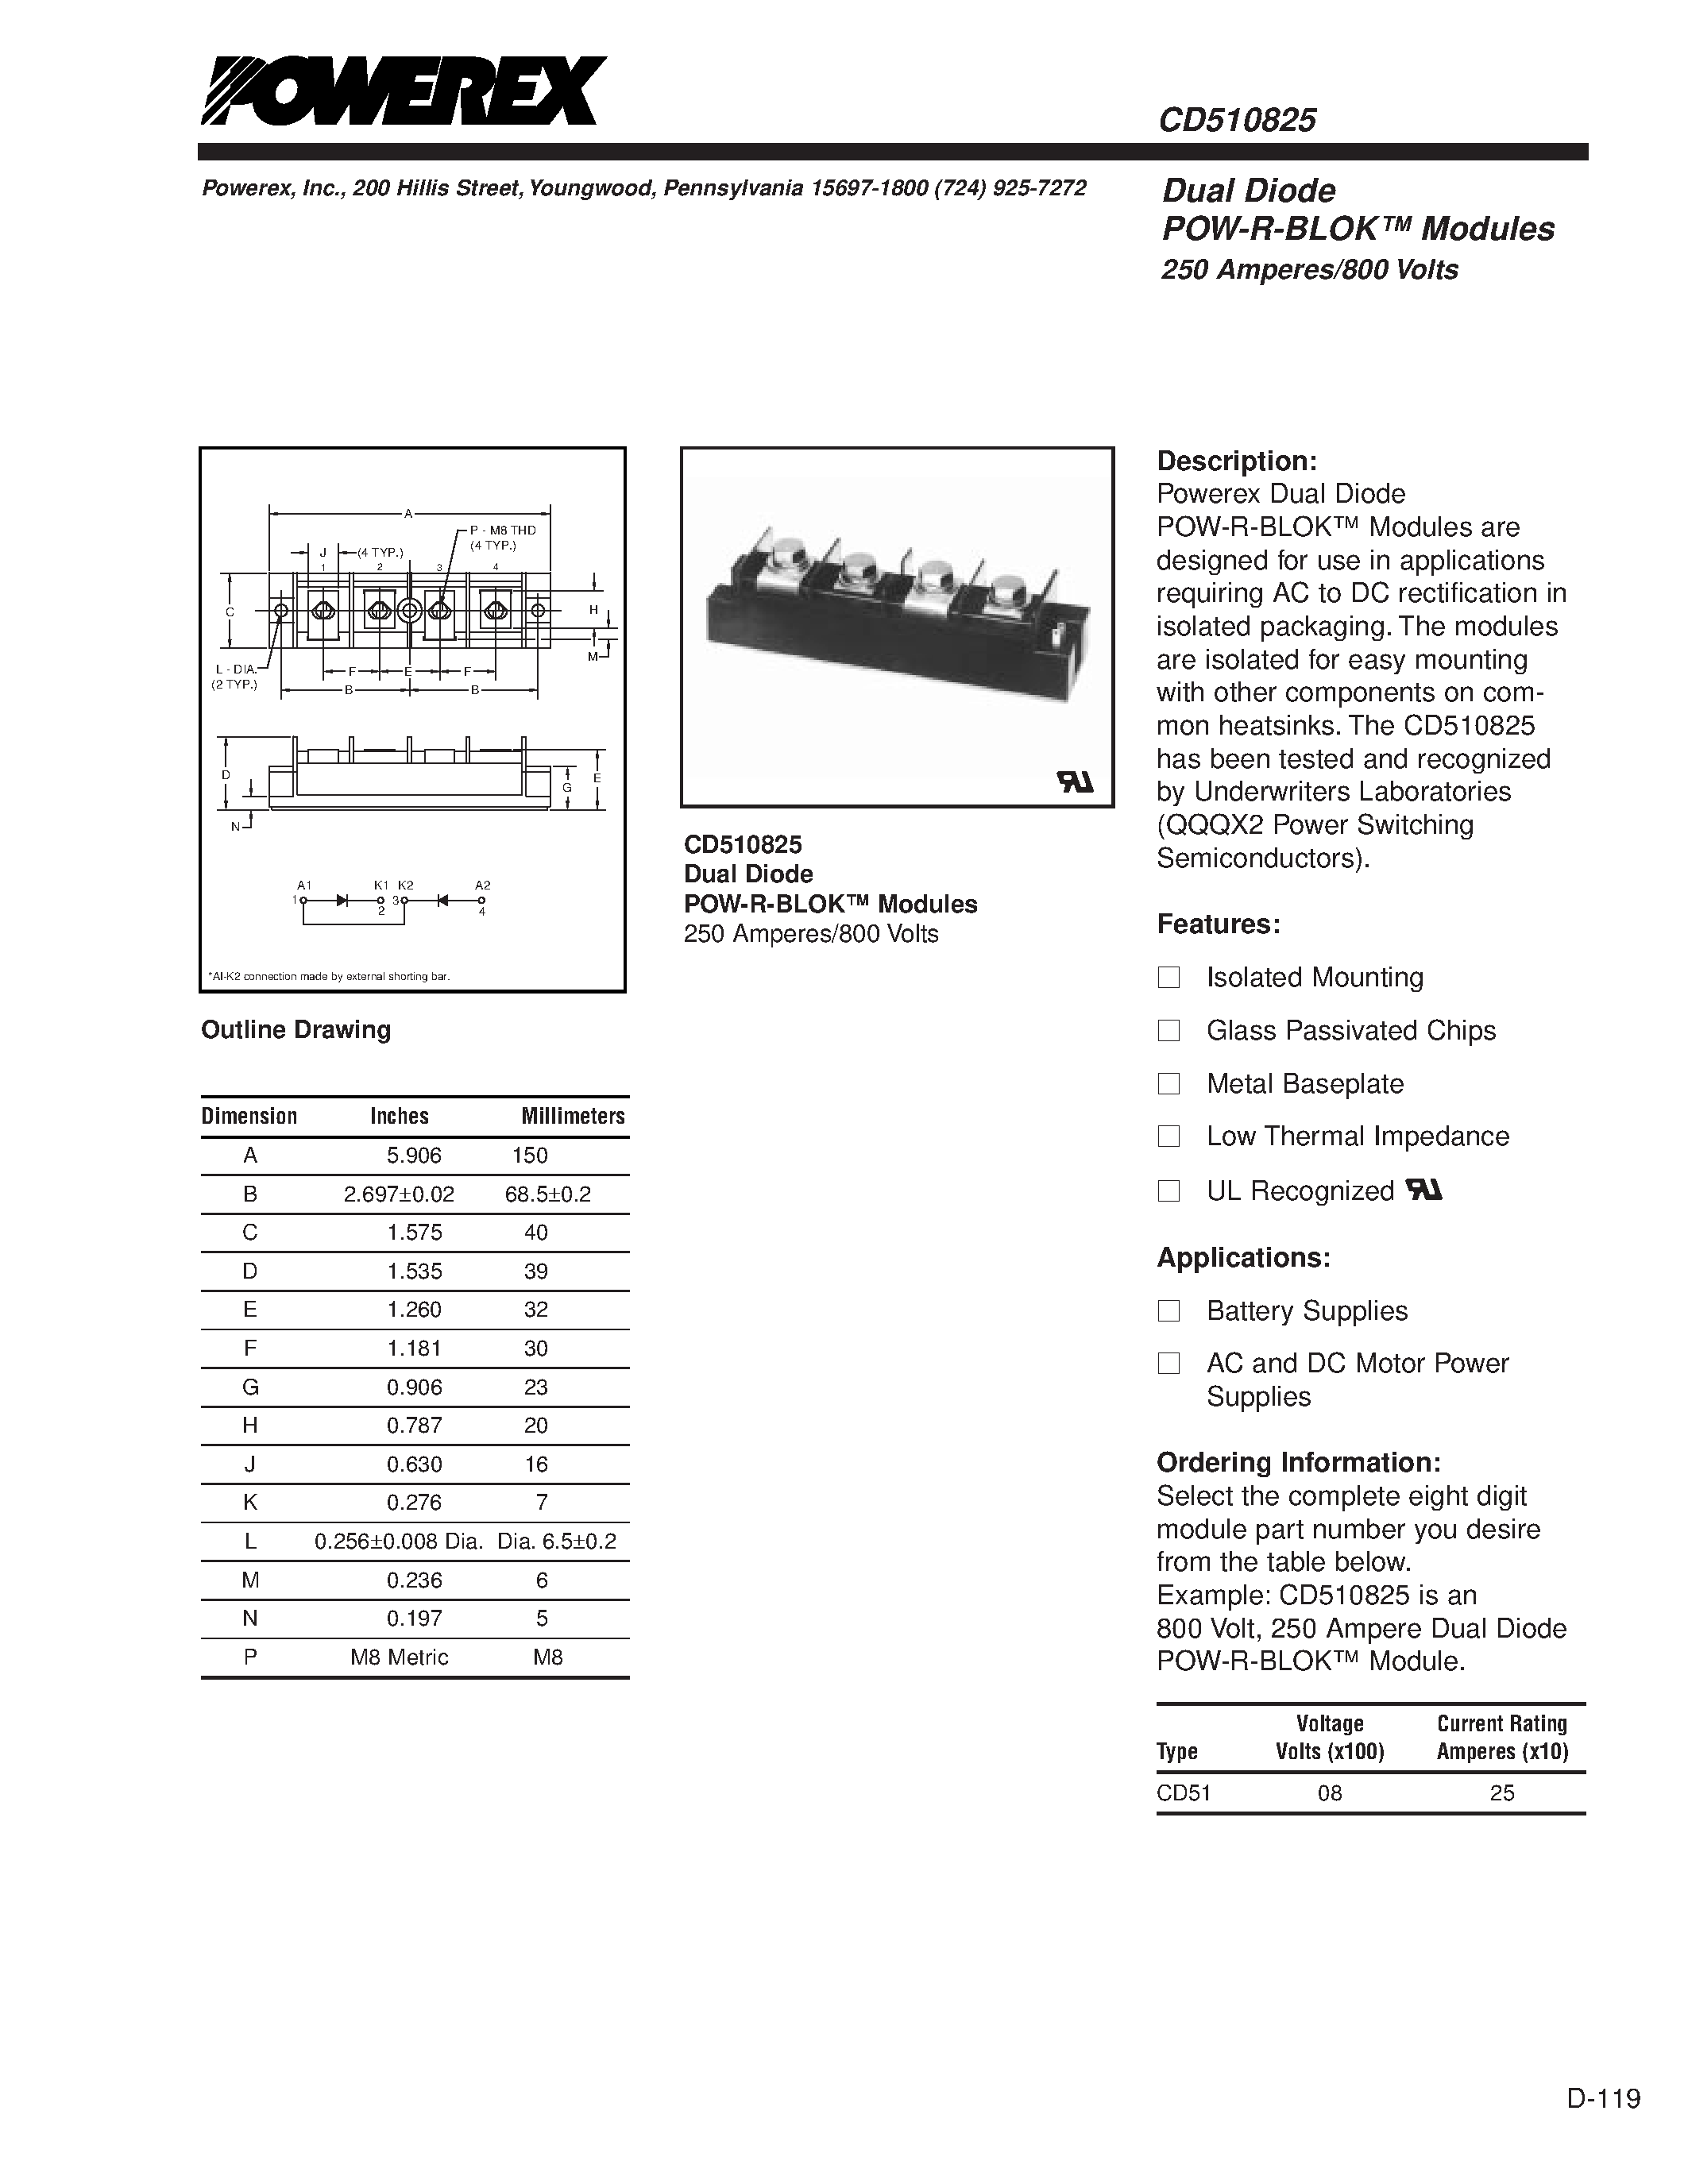 Даташит CD510825 - Dual Diode POW-R-BLOK Modules 250 Amperes/800 Volts страница 1